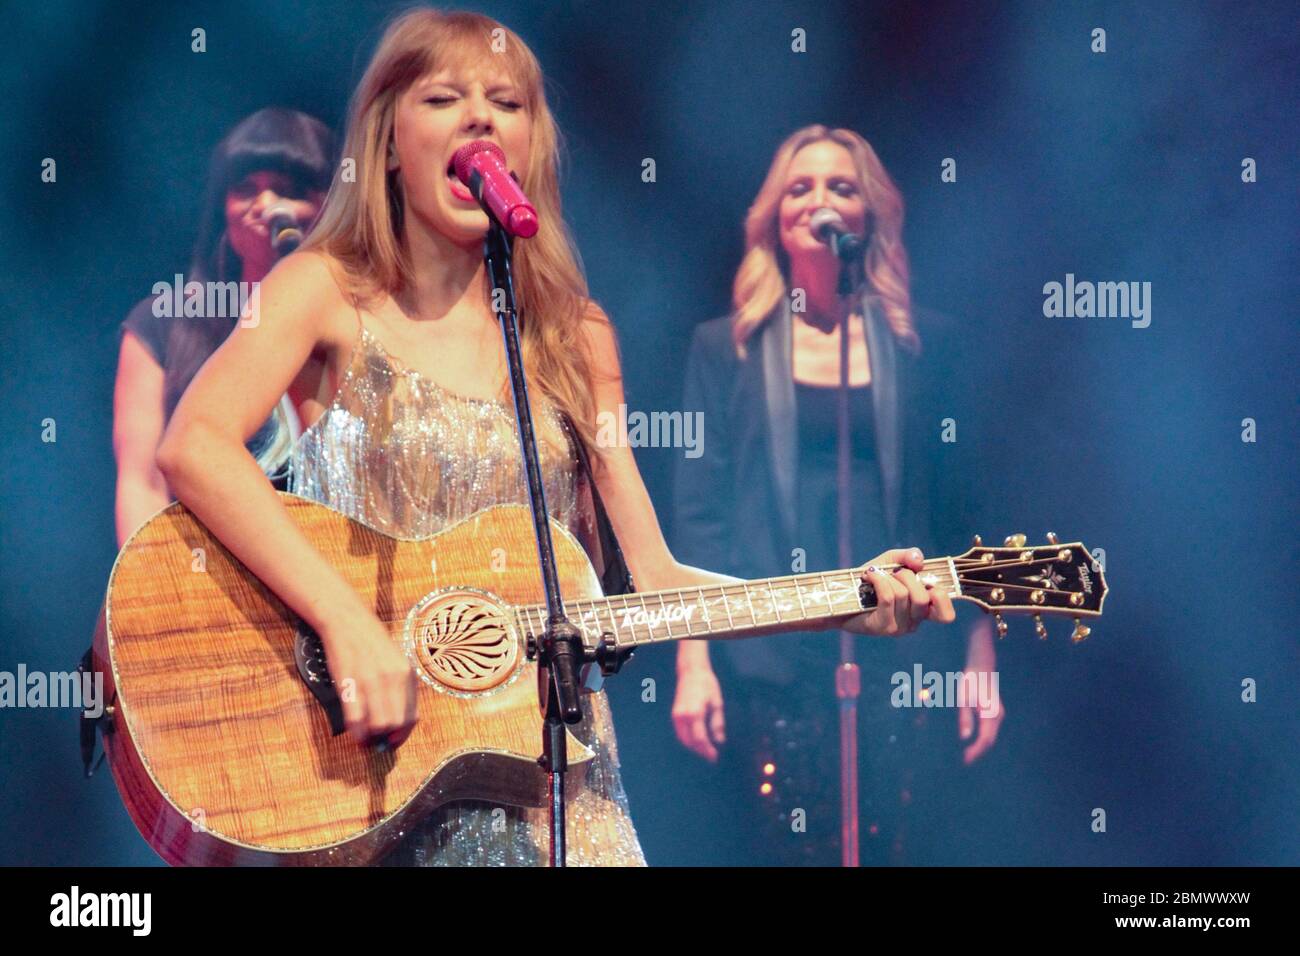 RIO DE JANEIRO, 13.09.2012: Taylor Swift performs at the Citibank Hall in Rio de Janeiro (Néstor J. Beremblum / Alamy News) Stock Photo